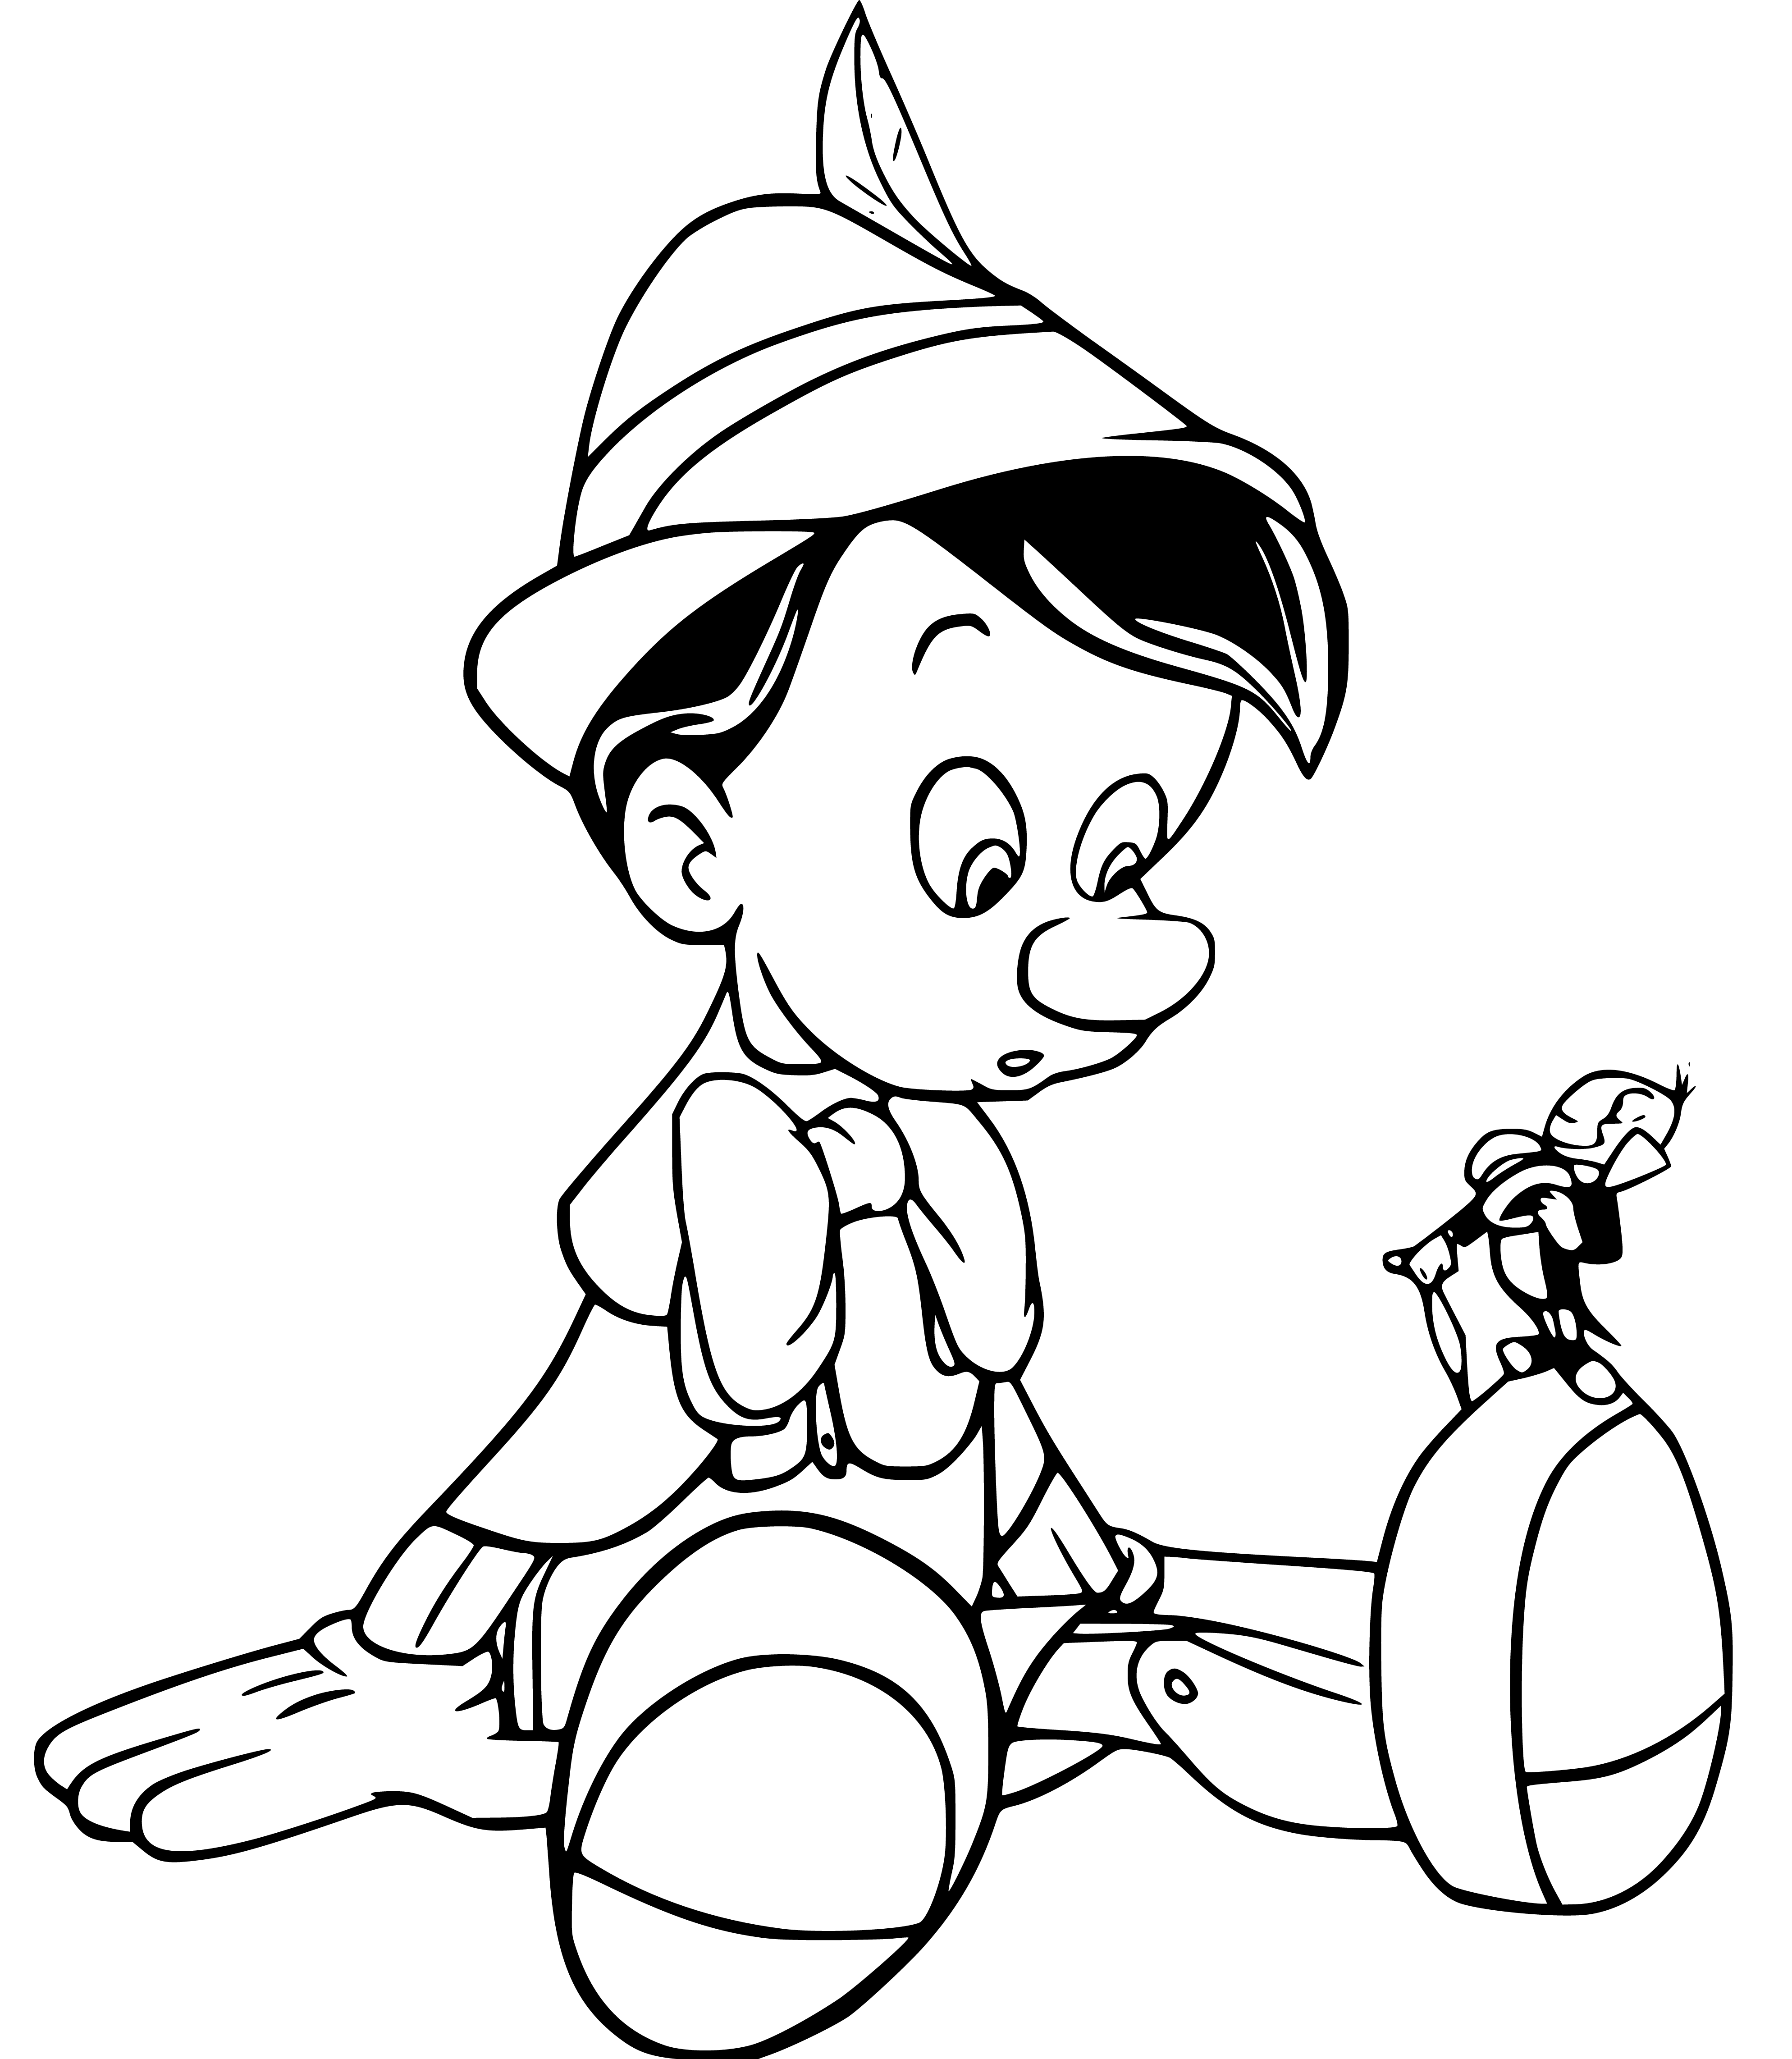 Pinocchio and Jiminy Coloring Sheet - SheetalColor.com